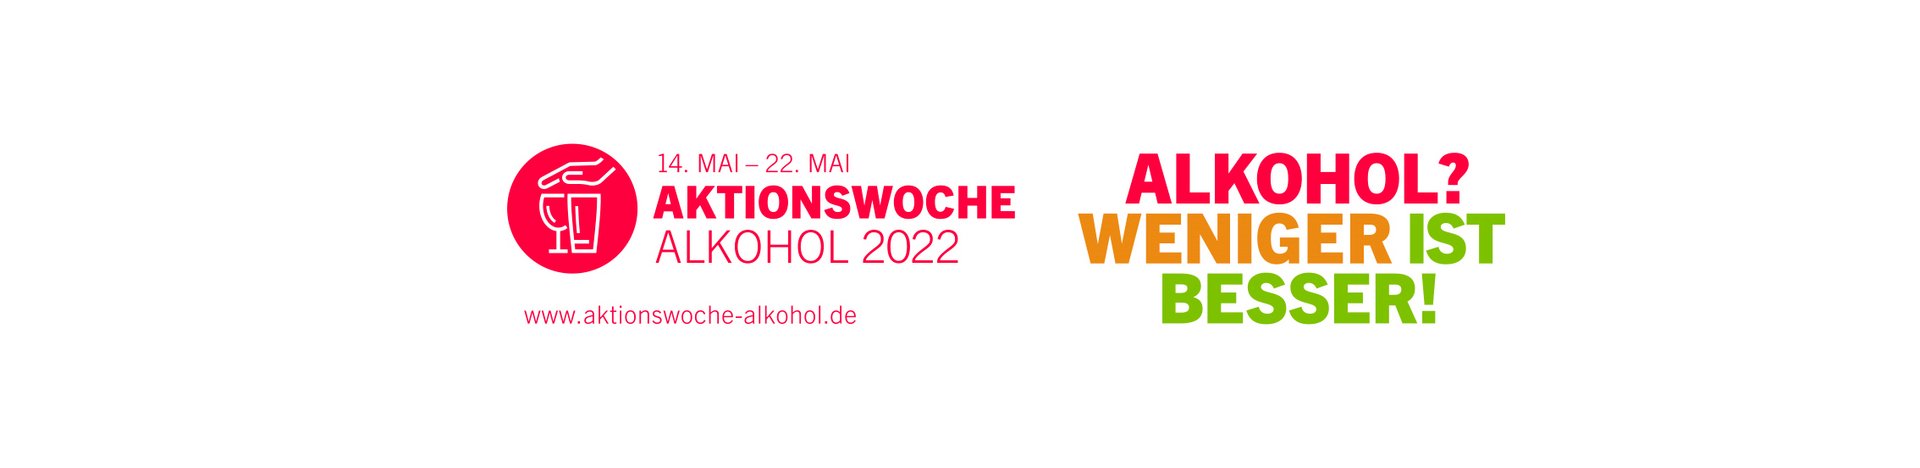 Aktionswoche_Alkohol_2022_Header